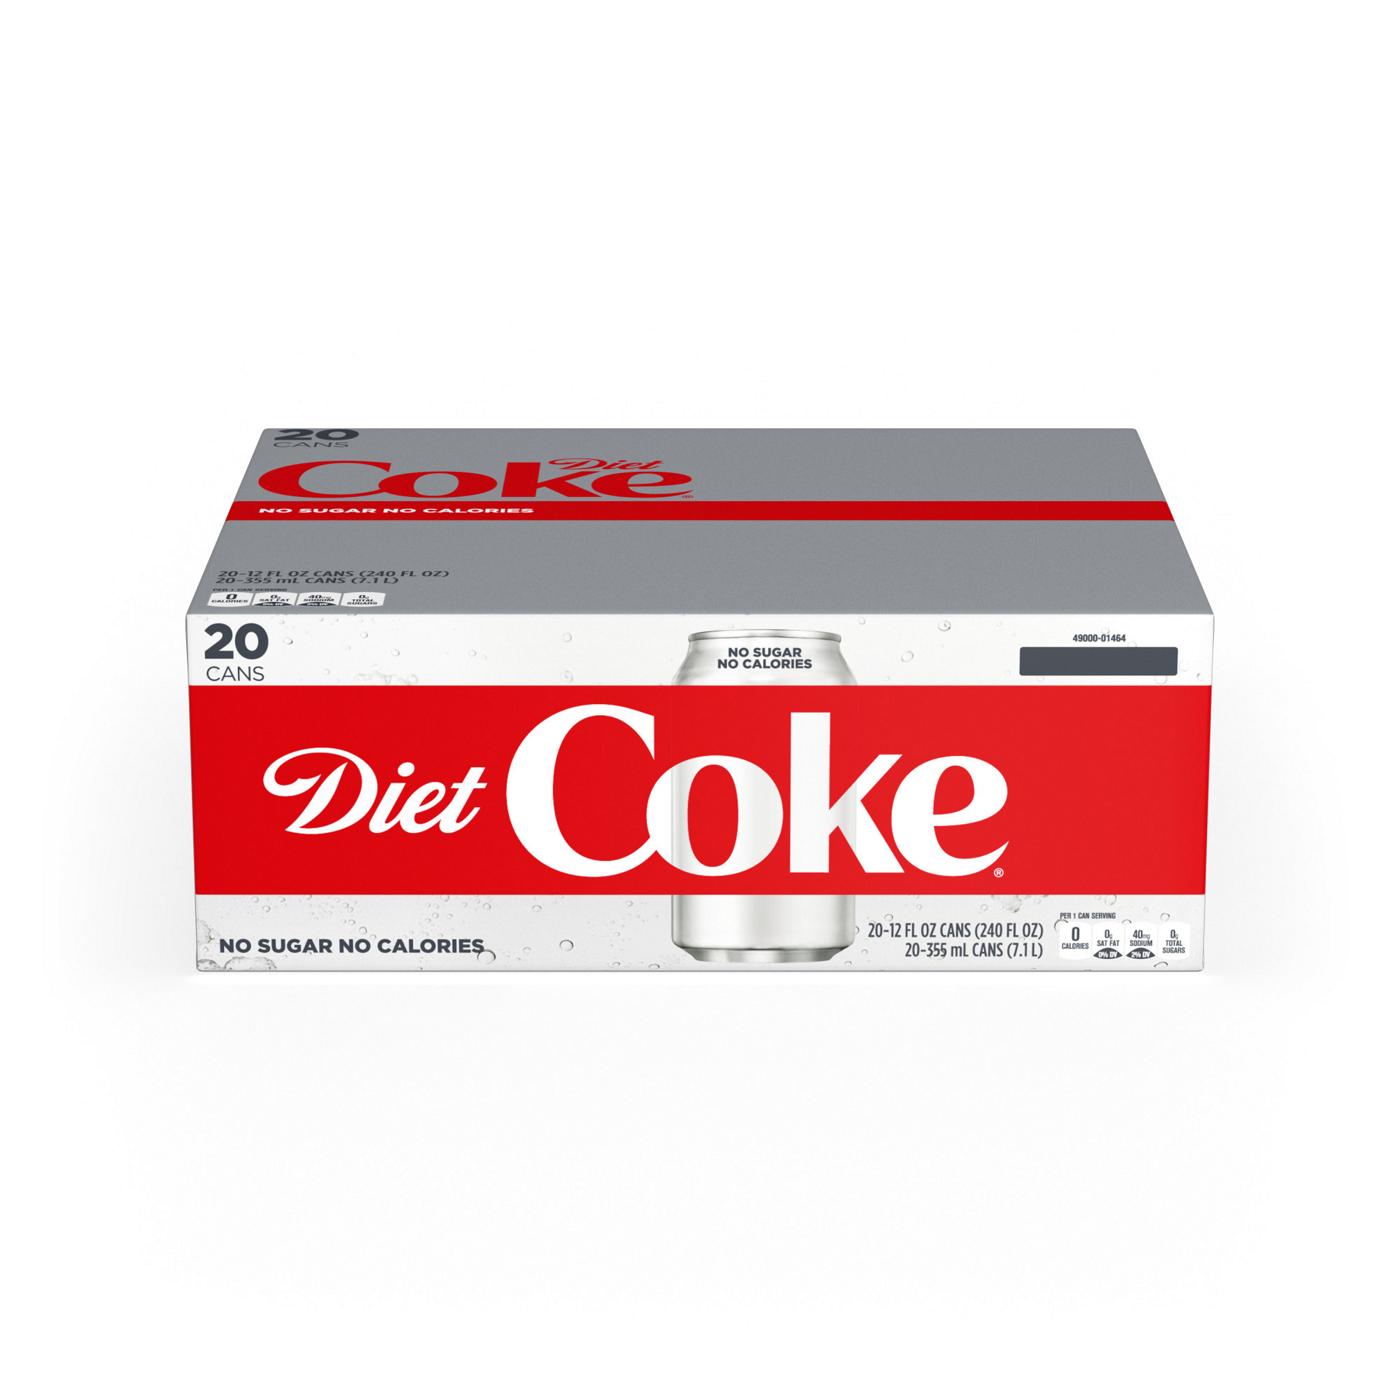 Coca-Cola Diet Coke 12 oz Cans; image 1 of 2